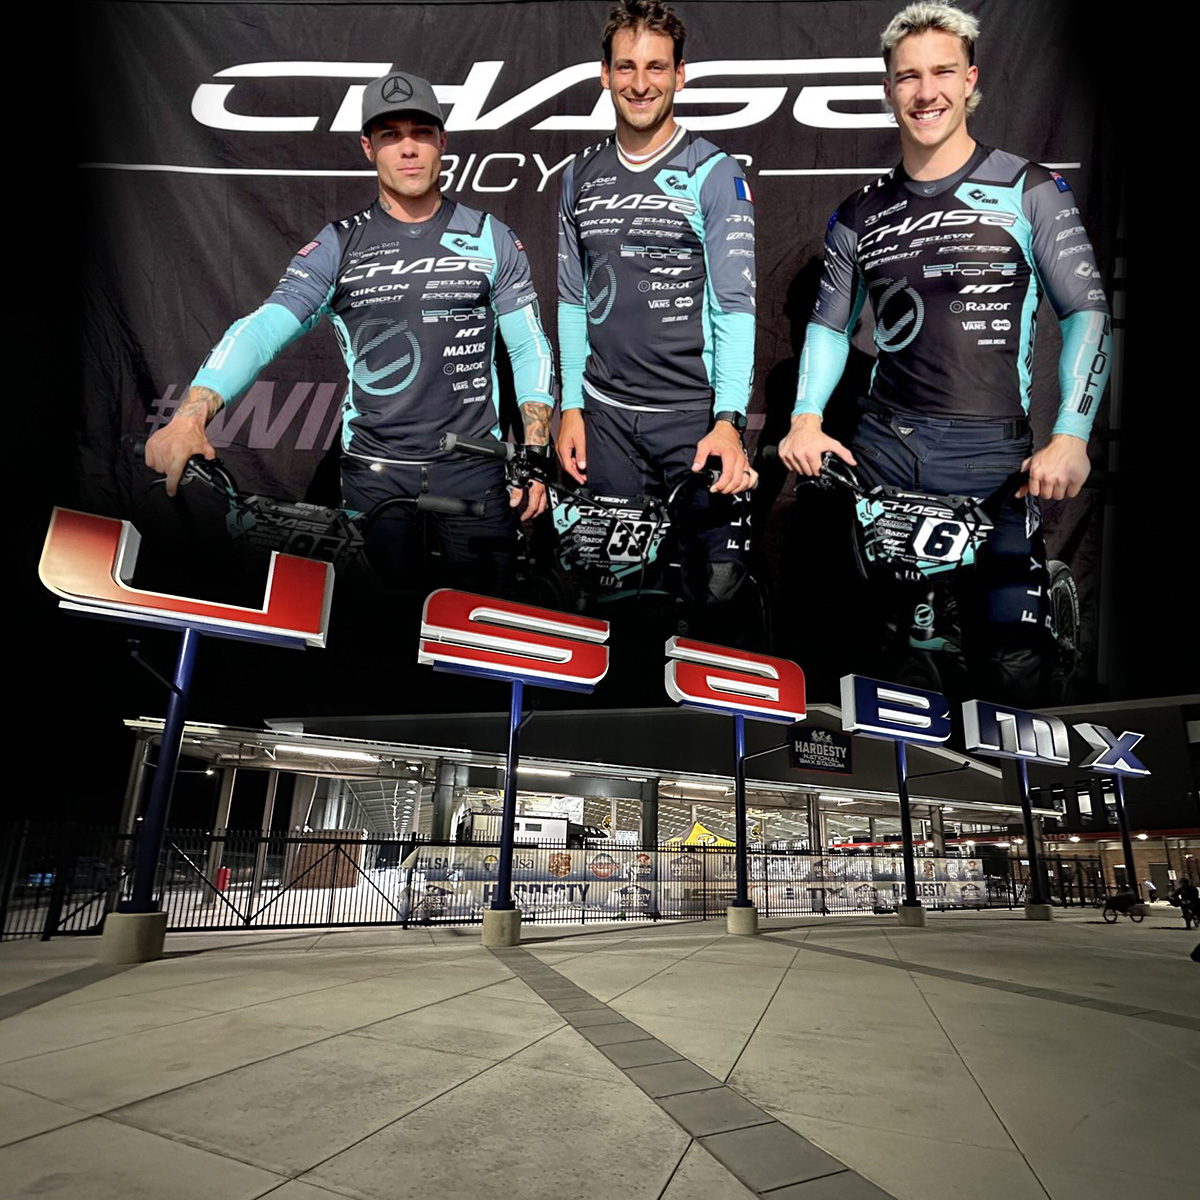 Chase BMX Pro Team Race Report USA BMX Legacy Nationals Tulsa, Oklahoma - Joris Wins Day 2 & Barry wins Both Days